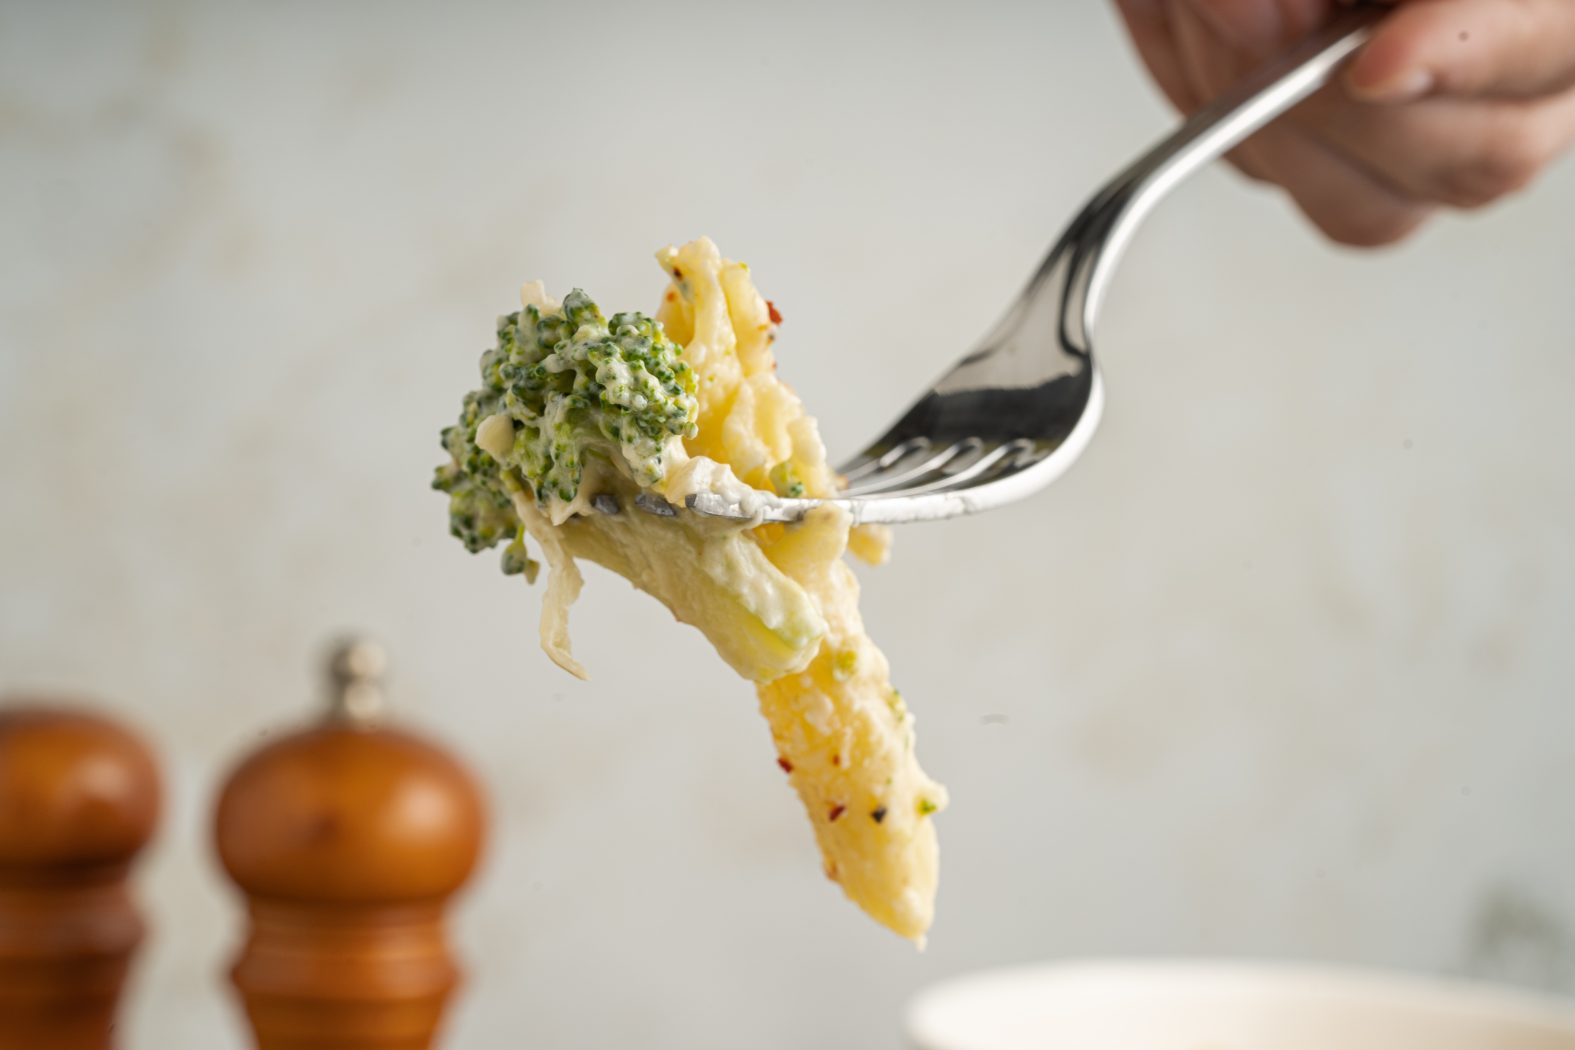 Pasta with Broccoli
